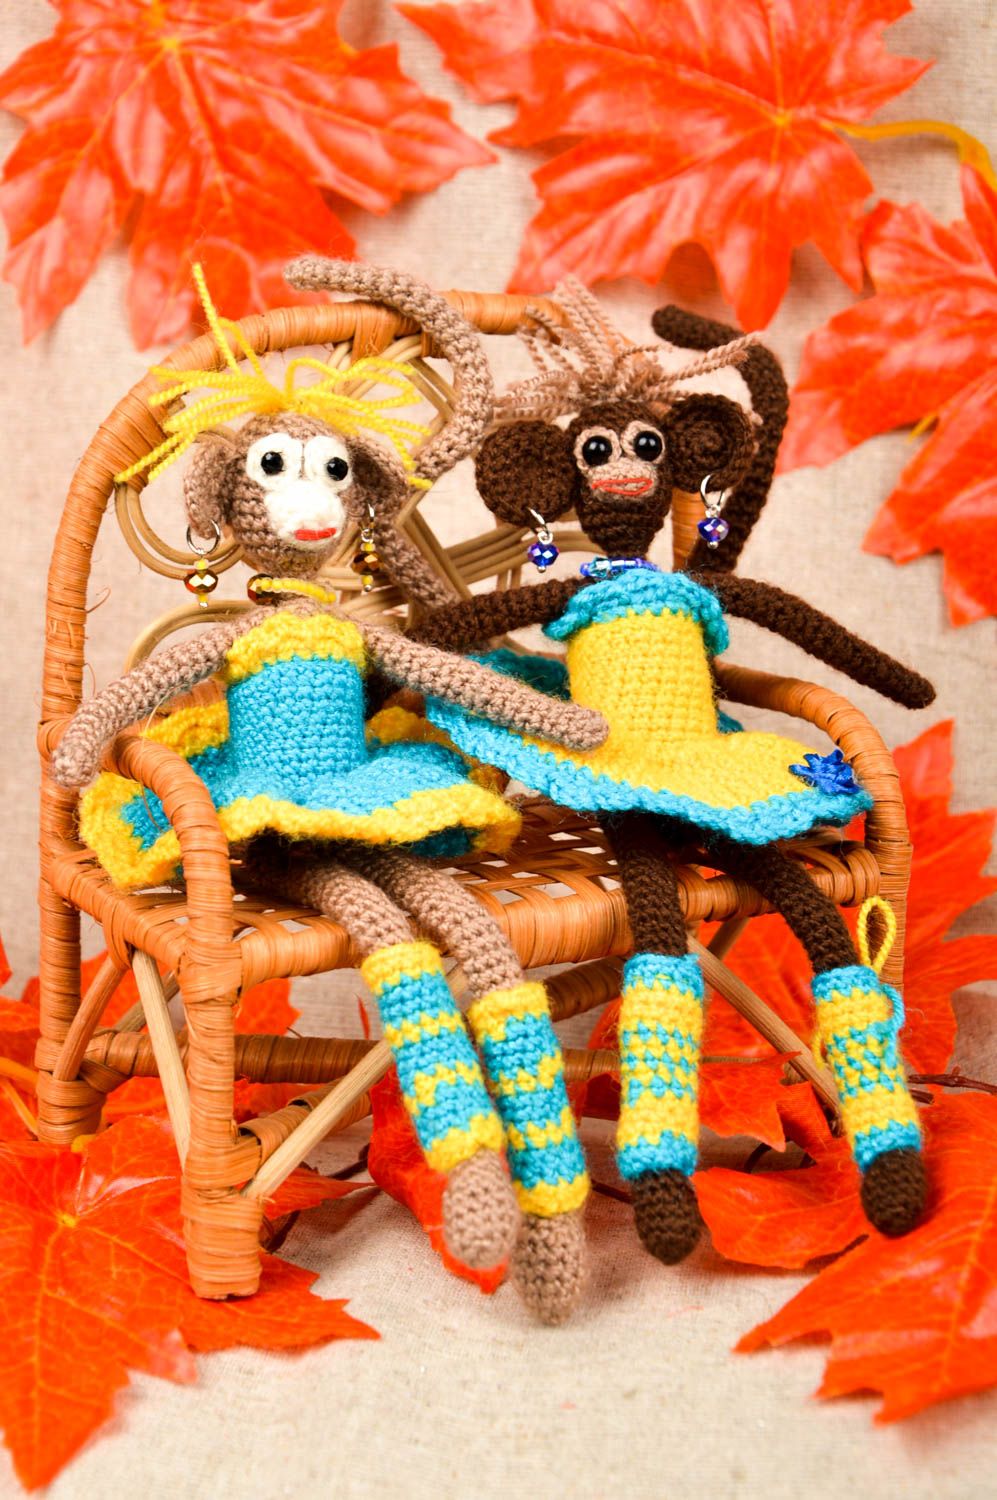 Handmade crocheted toys creative toys for children trendy toys nursery decor photo 1